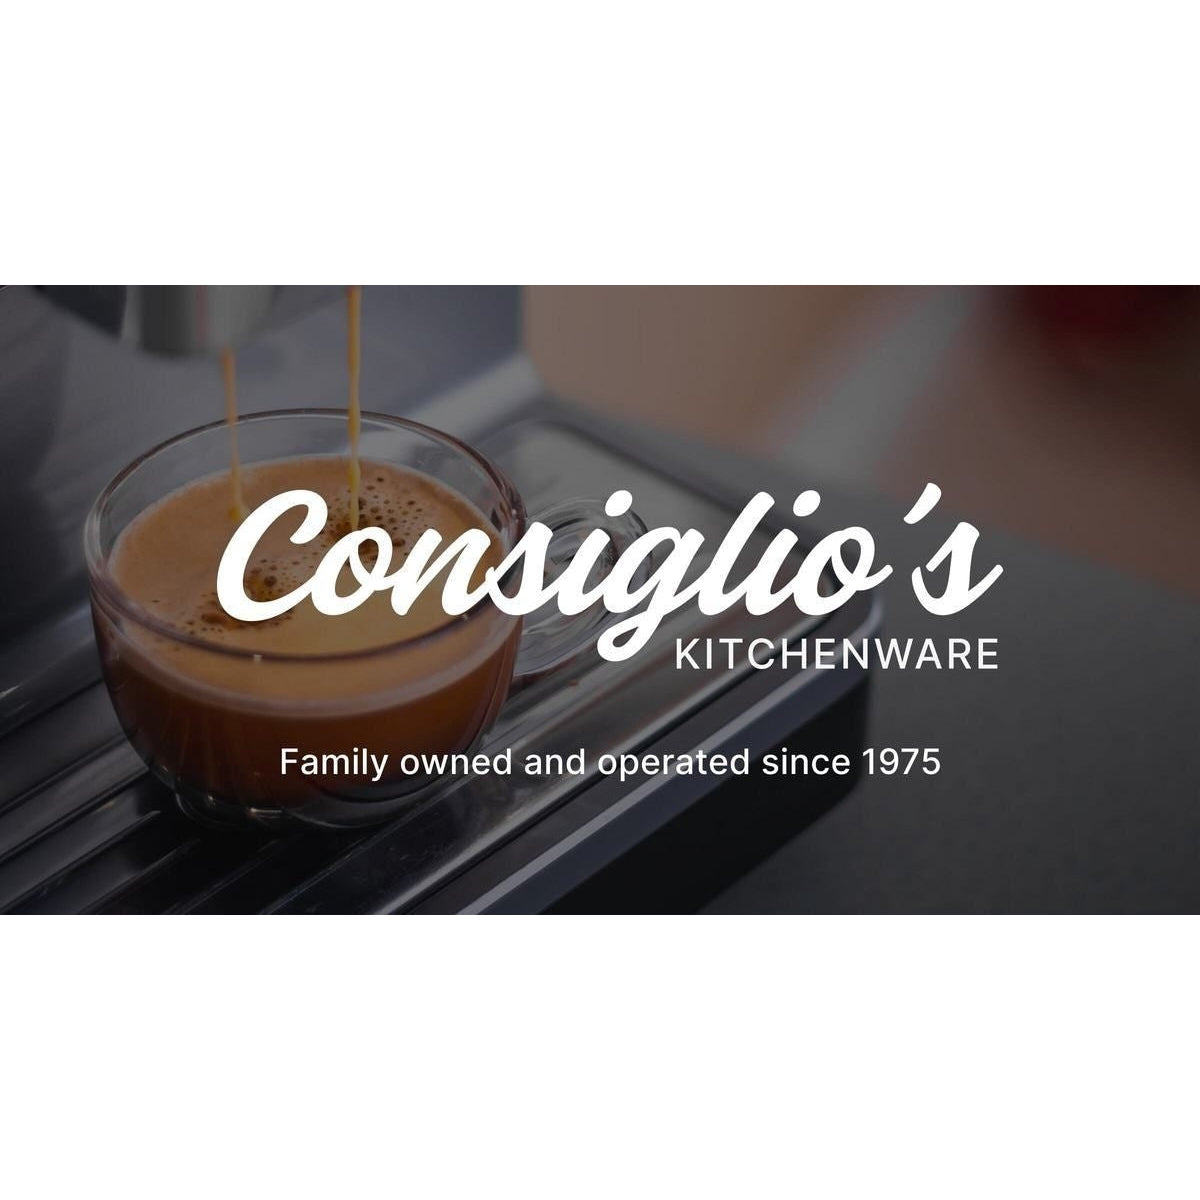 Consiglio’s Kitchenware family ran since 1975!